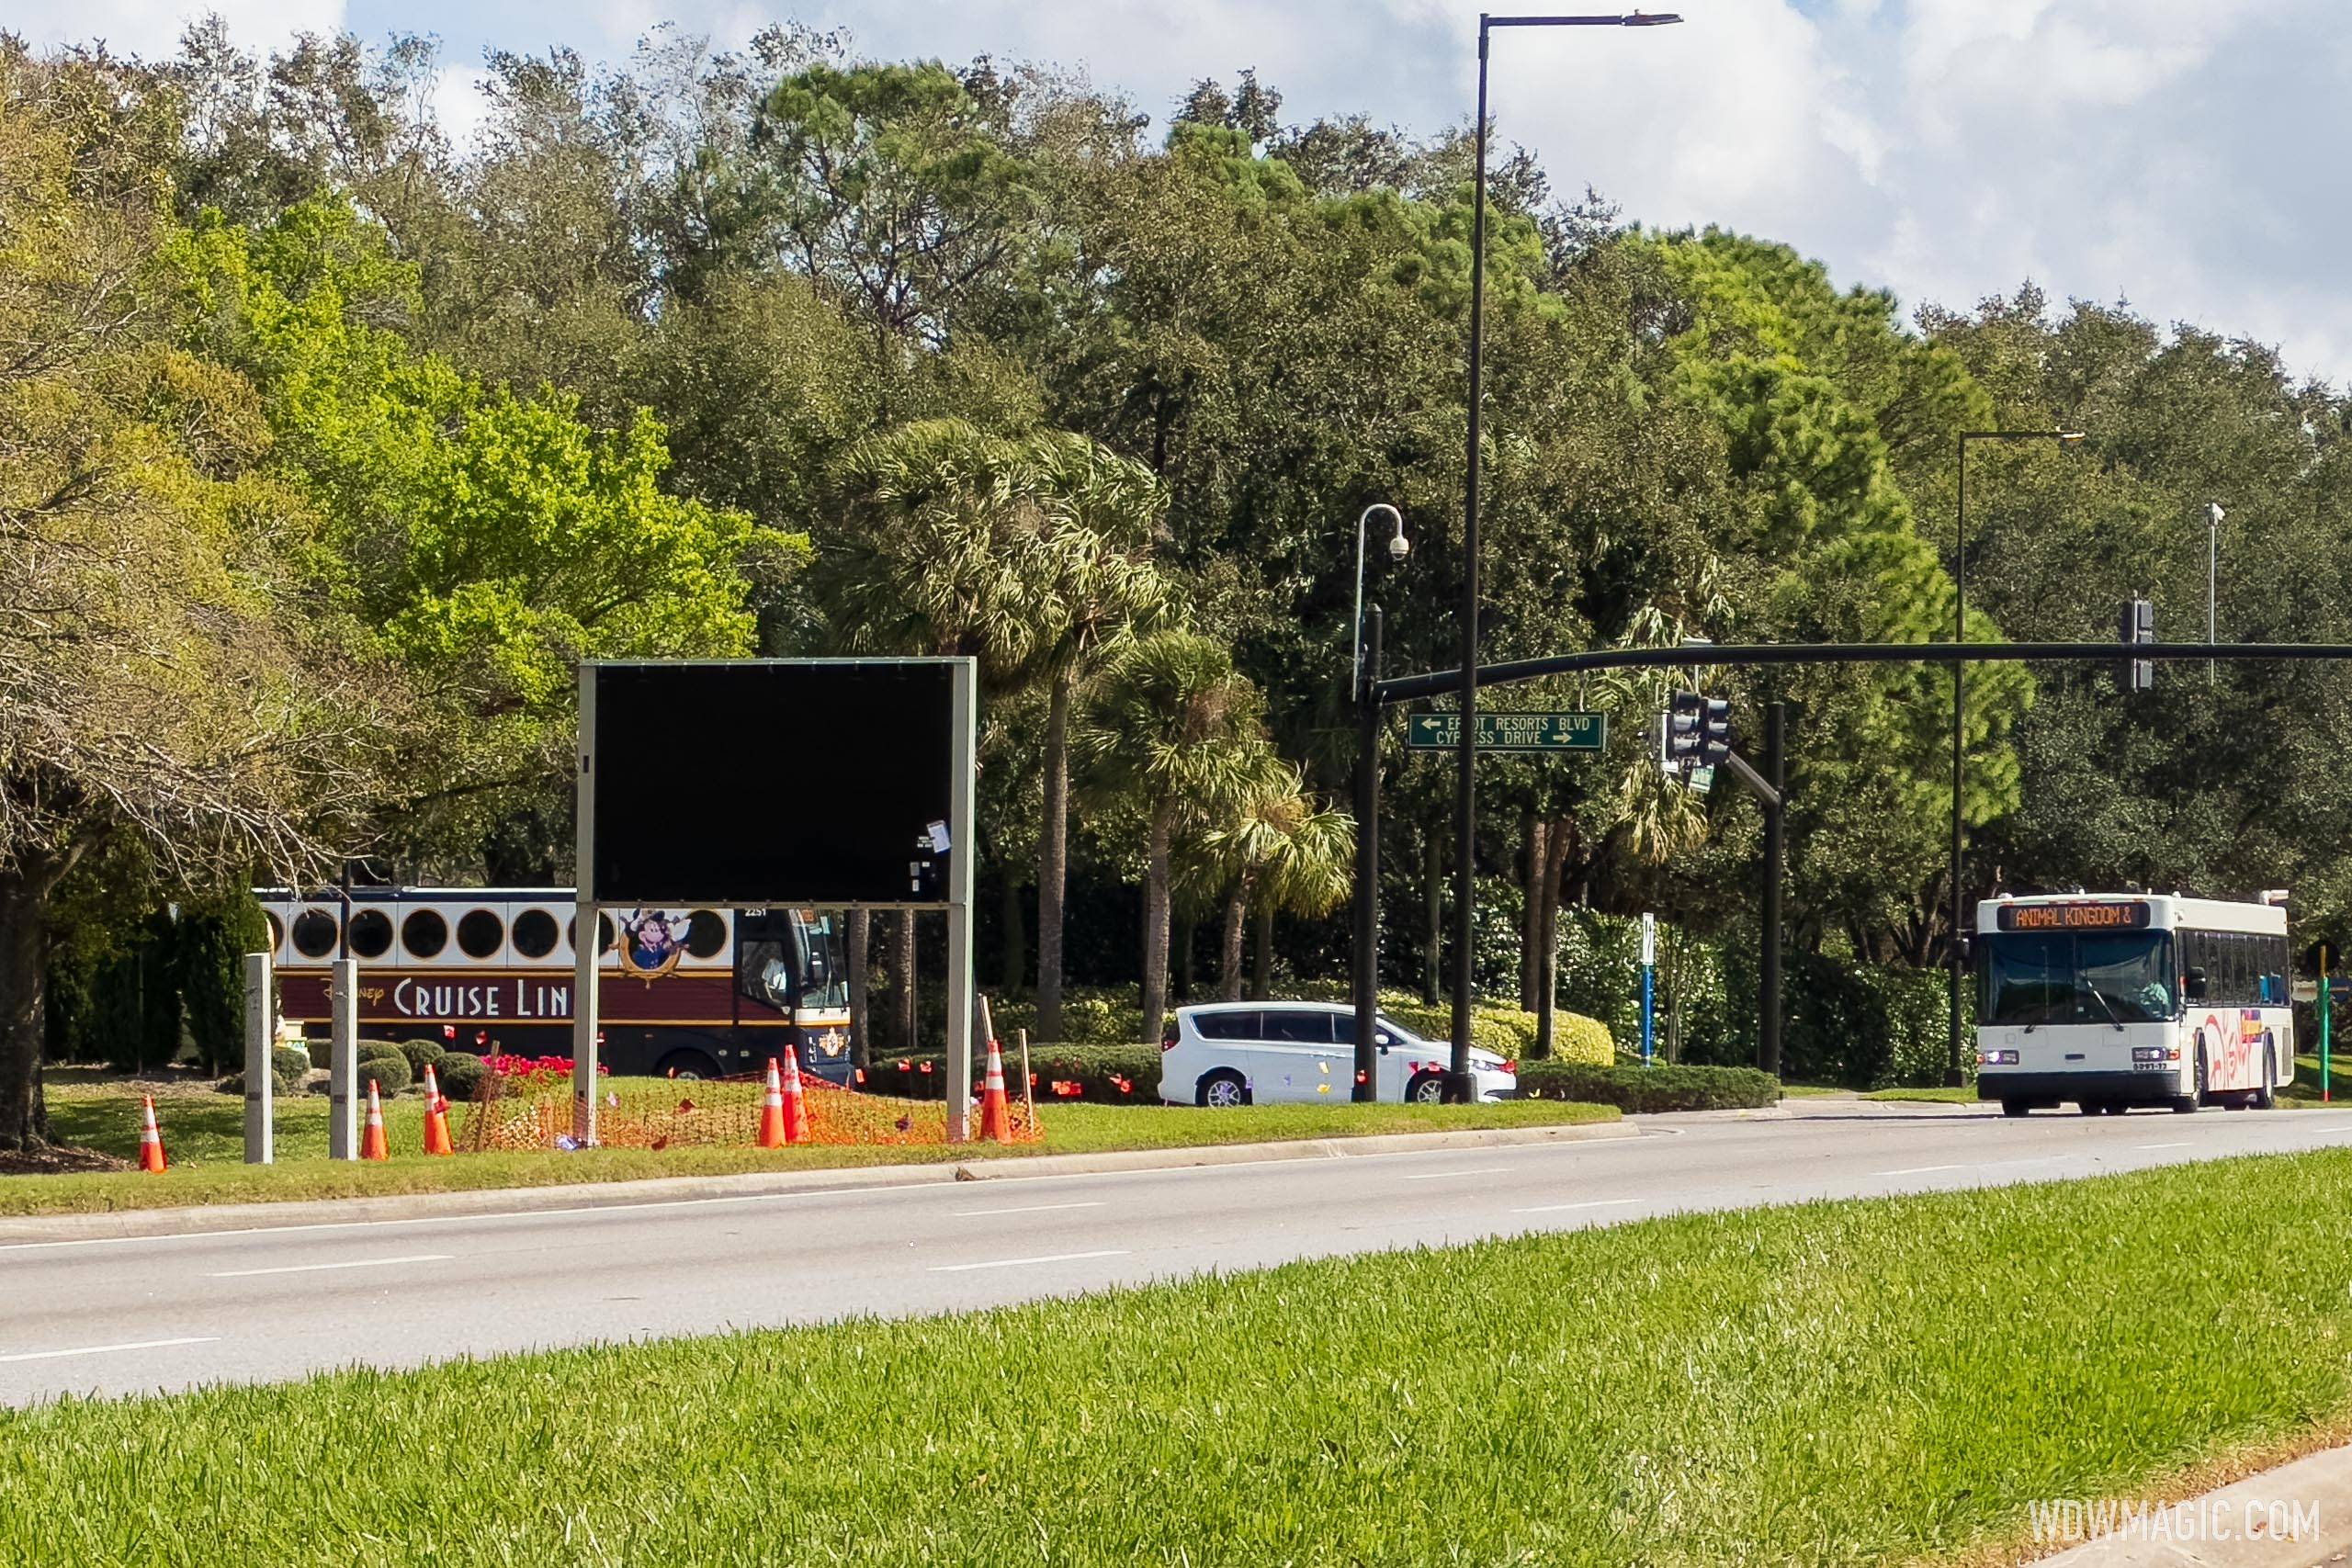 Disney begins adding more digital roadway signs around Walt Disney World property